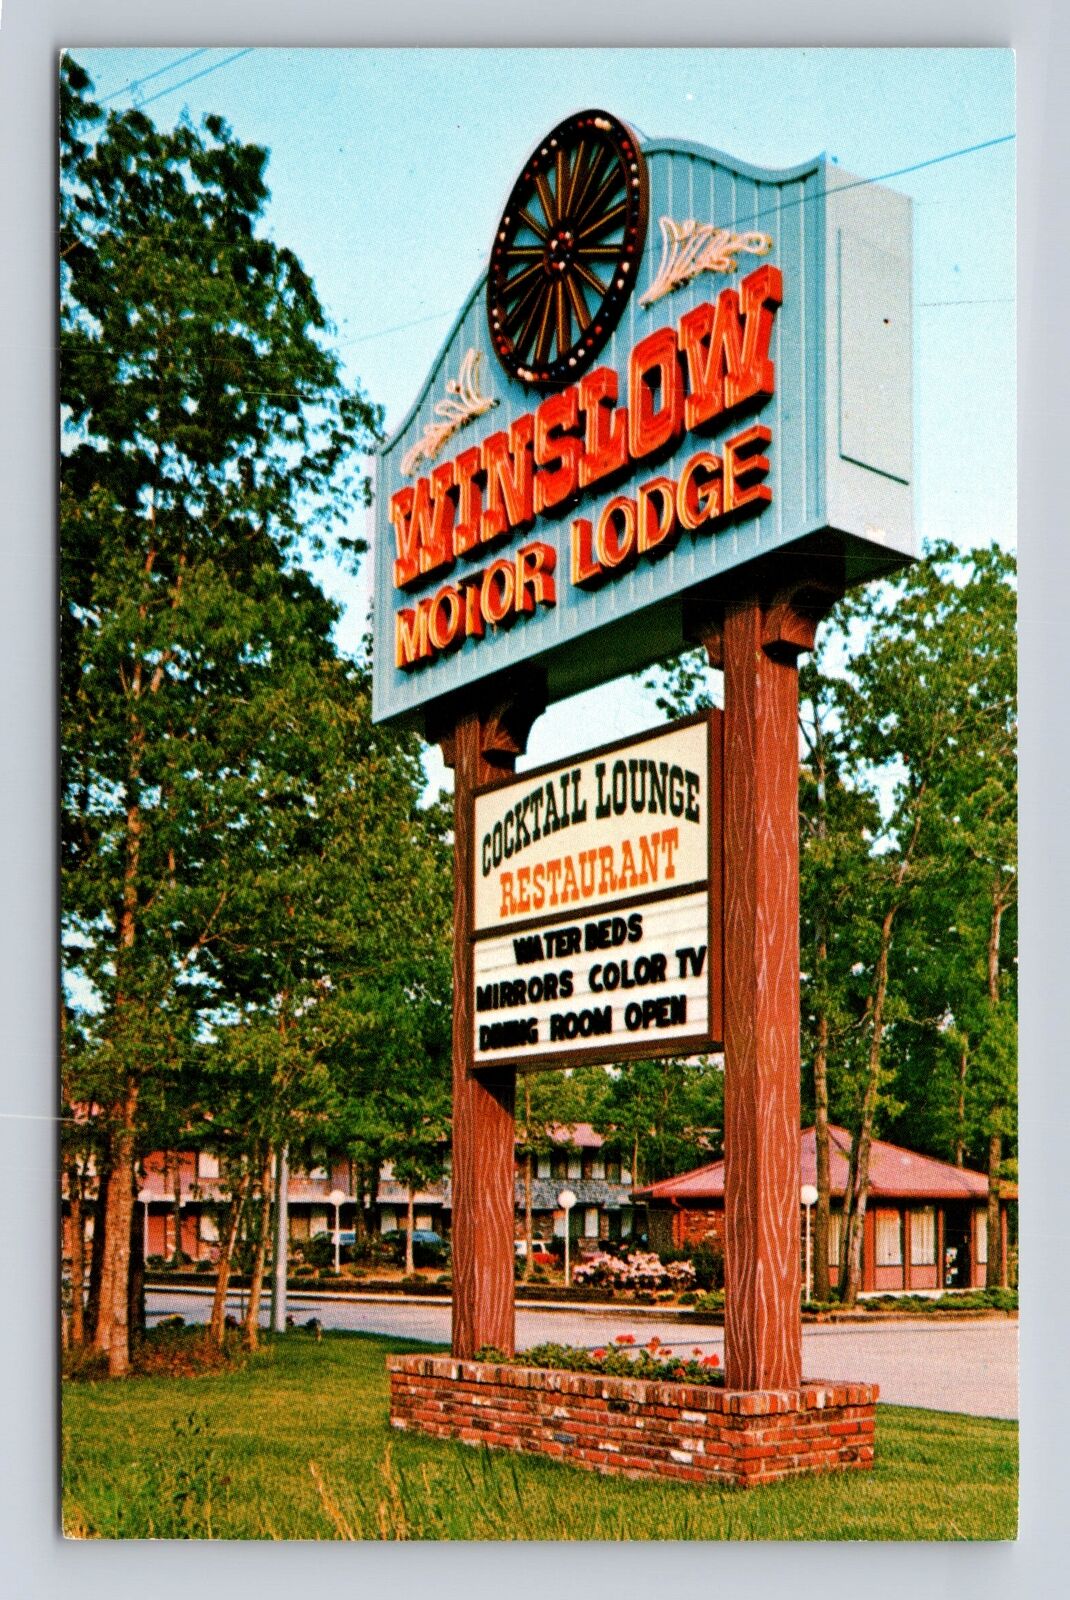 Winslow NJ-New Jersey, Winslow Motor Lodge, Advertisement, Vintage Postcard